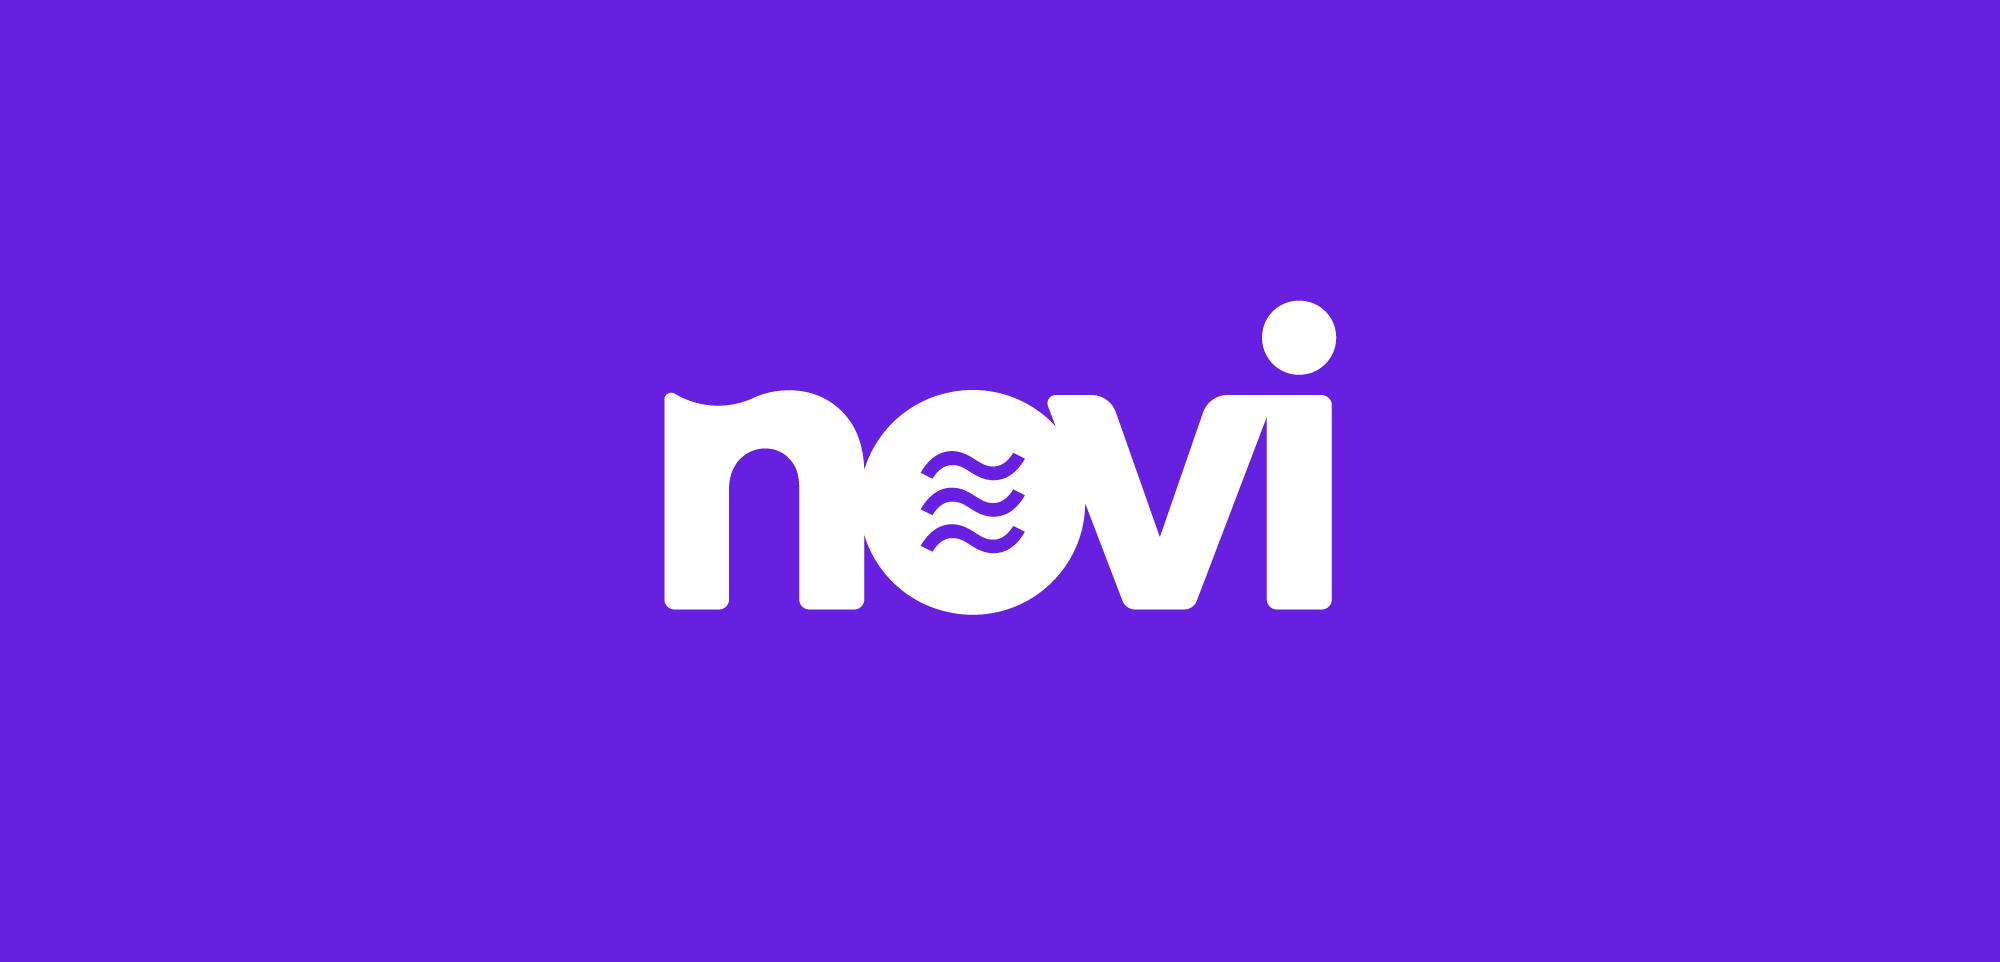 Novi written with white alphabets on a purple shade